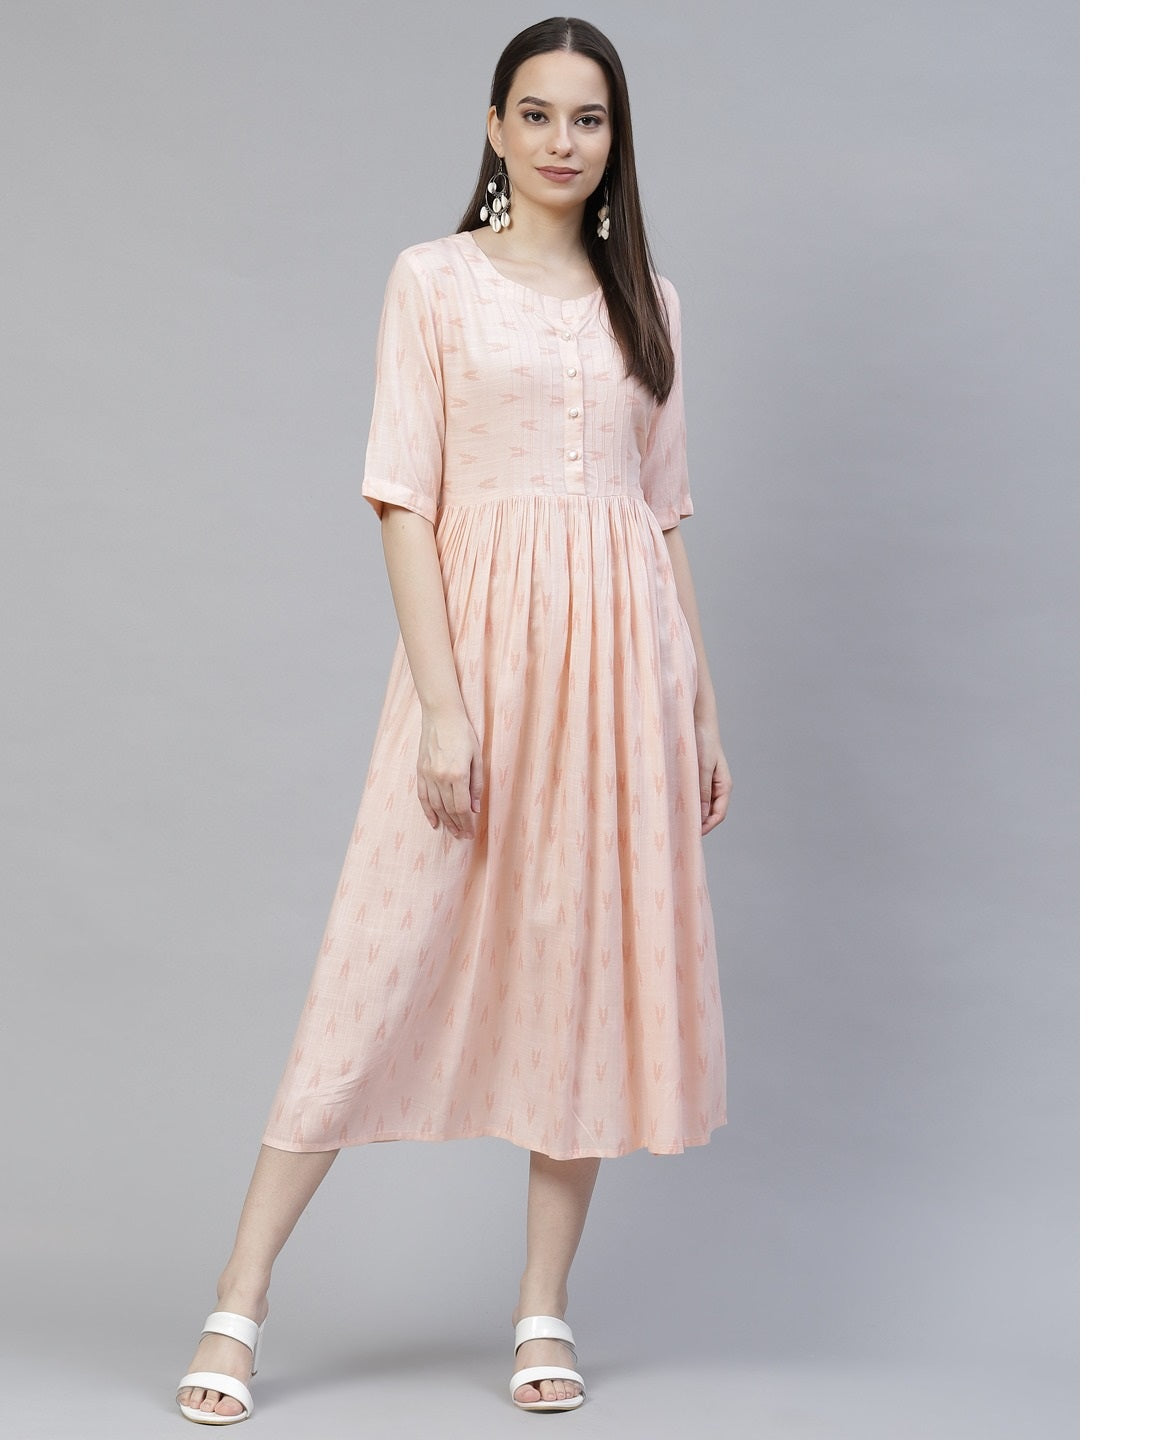 Ethnic Blush Peach Midi Dress